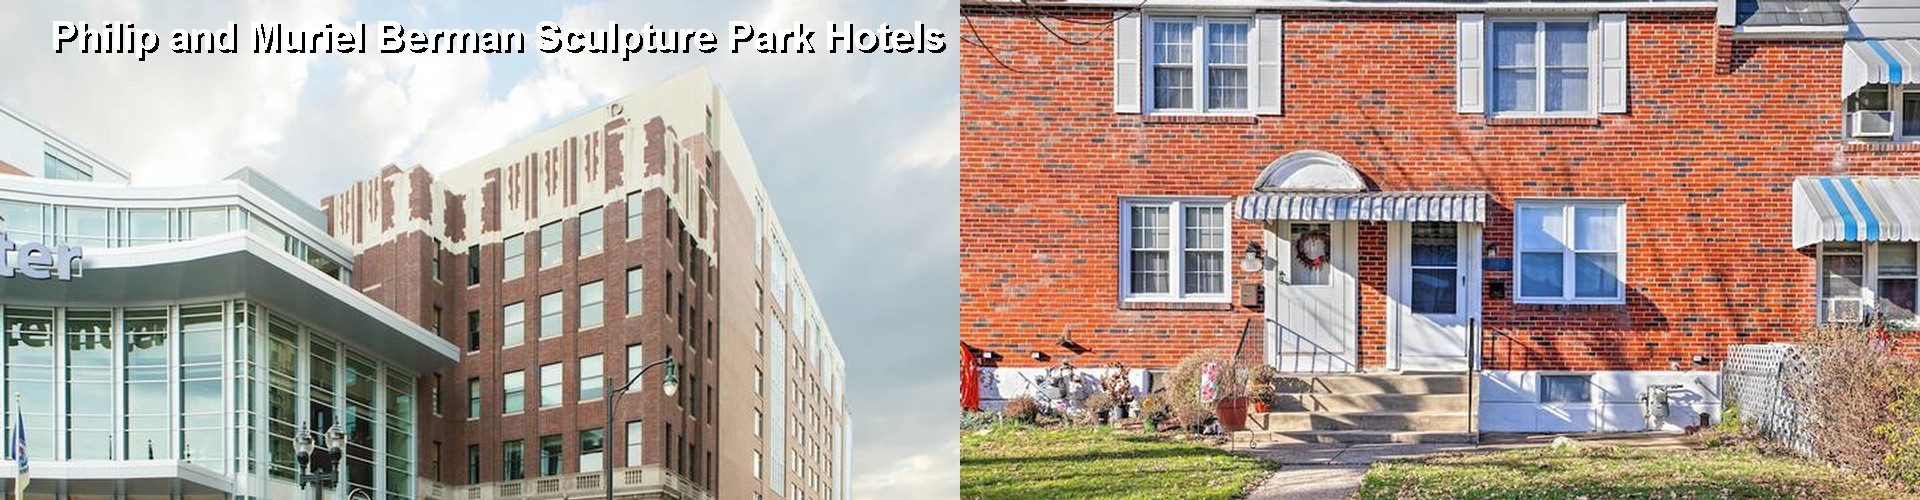 3 Best Hotels near Philip and Muriel Berman Sculpture Park